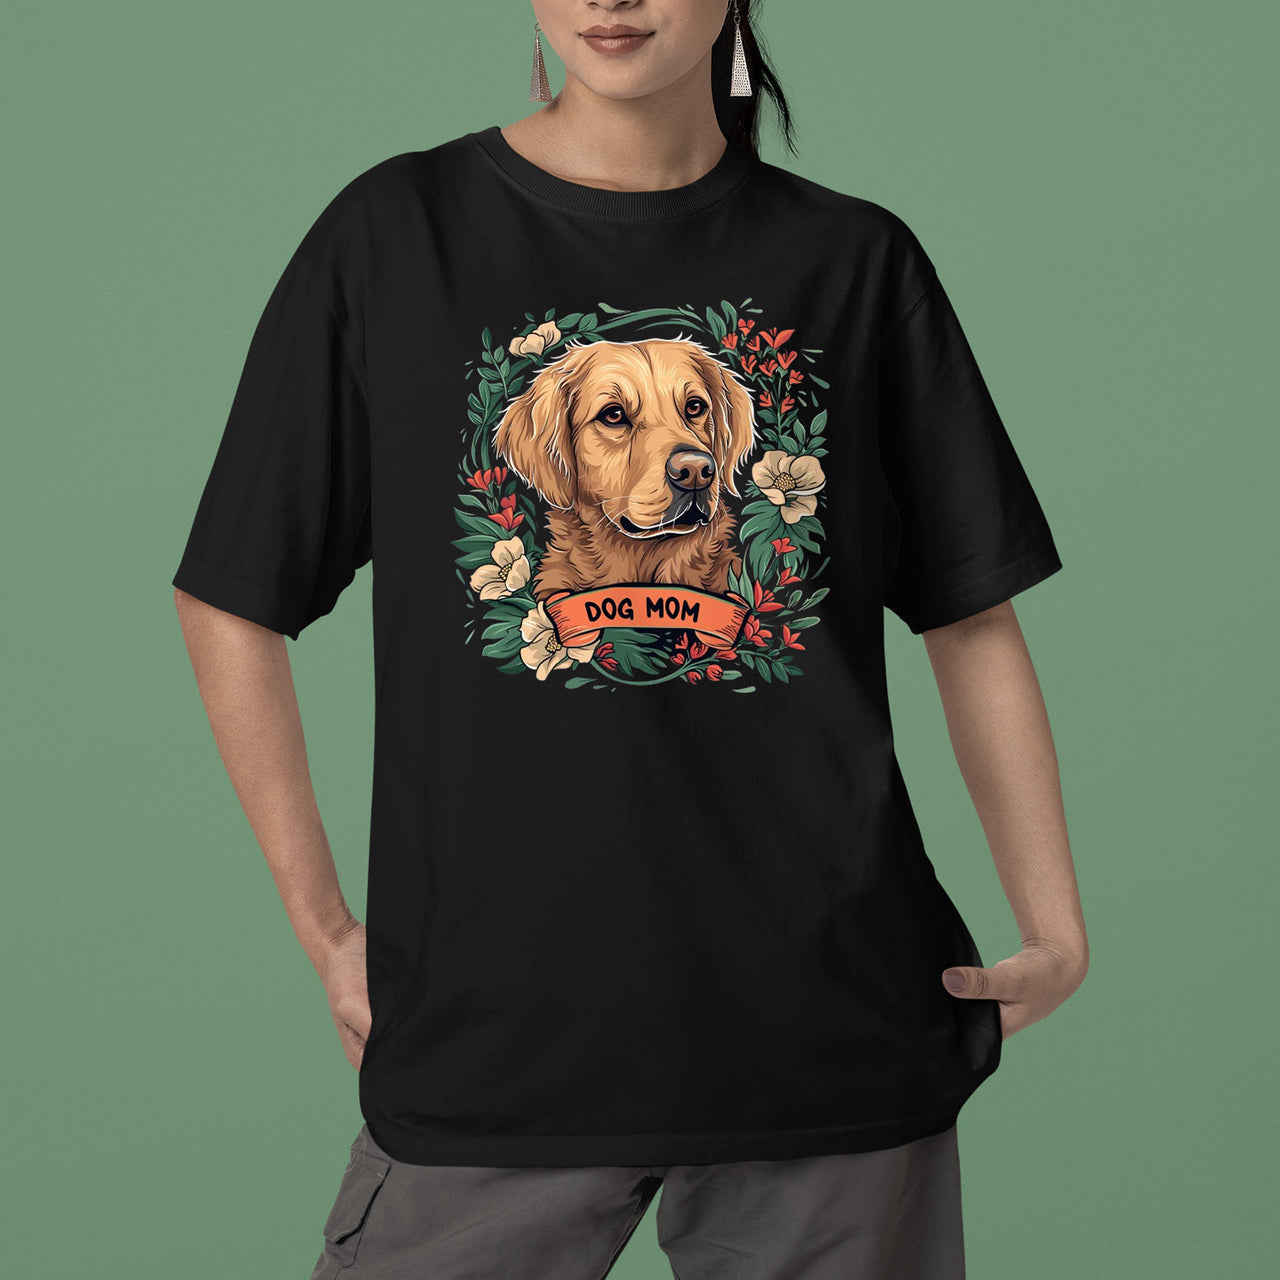 Labrador Retriever Dog T-shirt, Pet Lover Shirt, Dog Lover Shirt, Dog Mom T-Shirt, Dog Owner Shirt, Gift For Dog Mom, Funny Dog Shirts, Women Dog T-Shirt, Mother's Day Gift, Dog Lover Wife Gifts, Dog Shirt